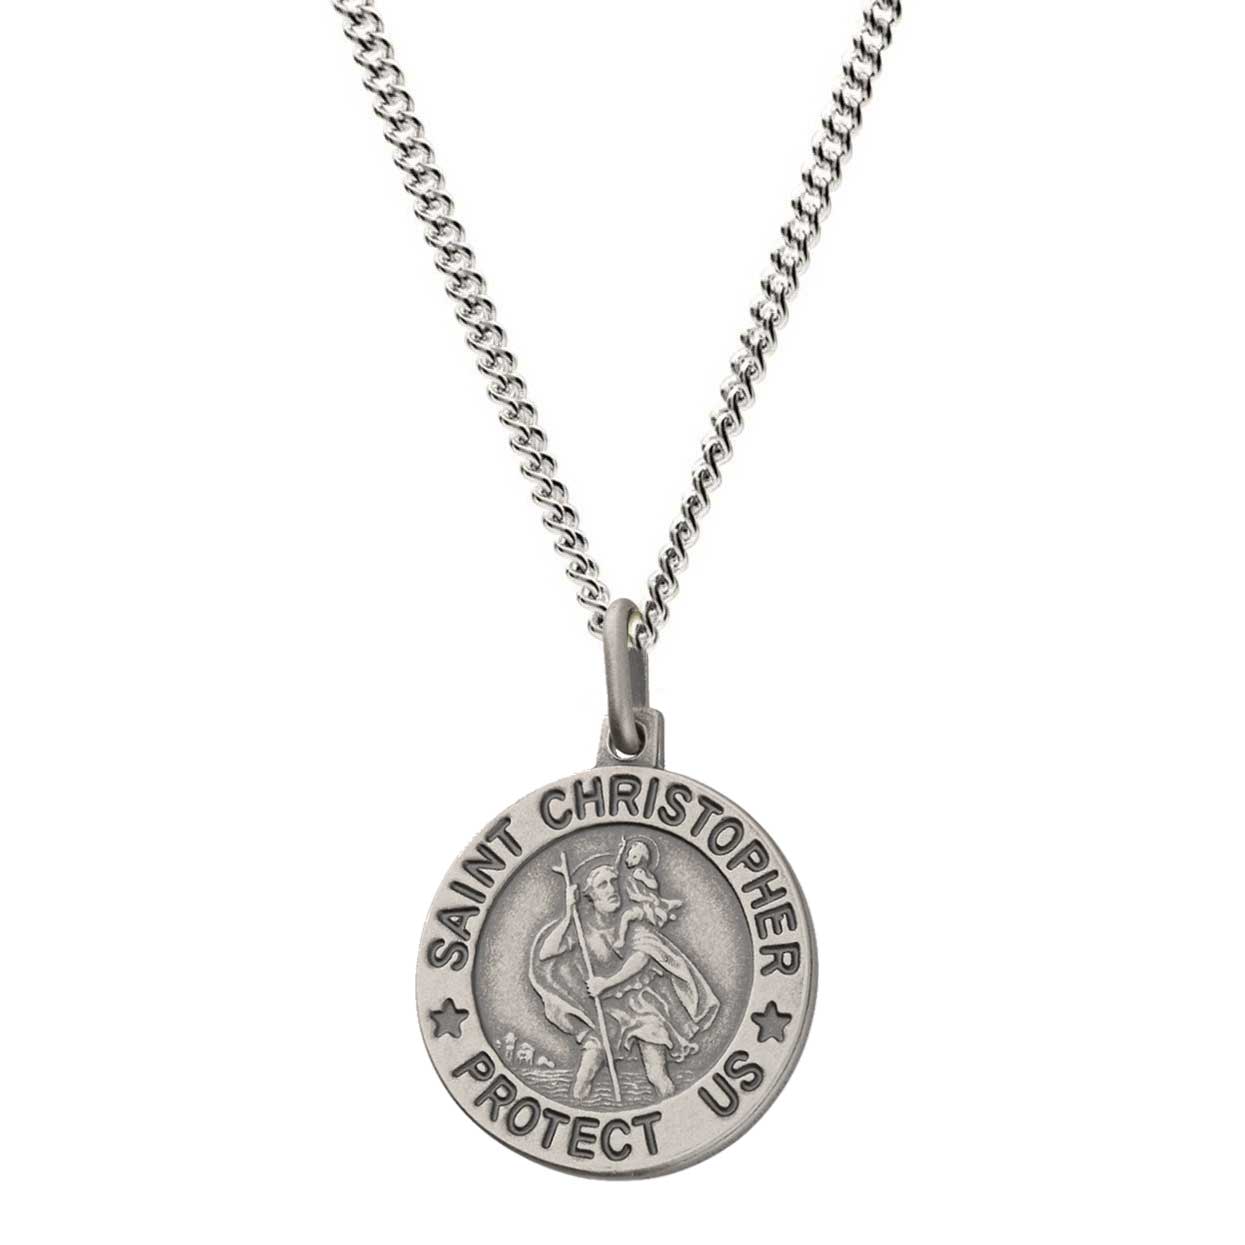 saint christopher protect us silver necklace vintage oxidised